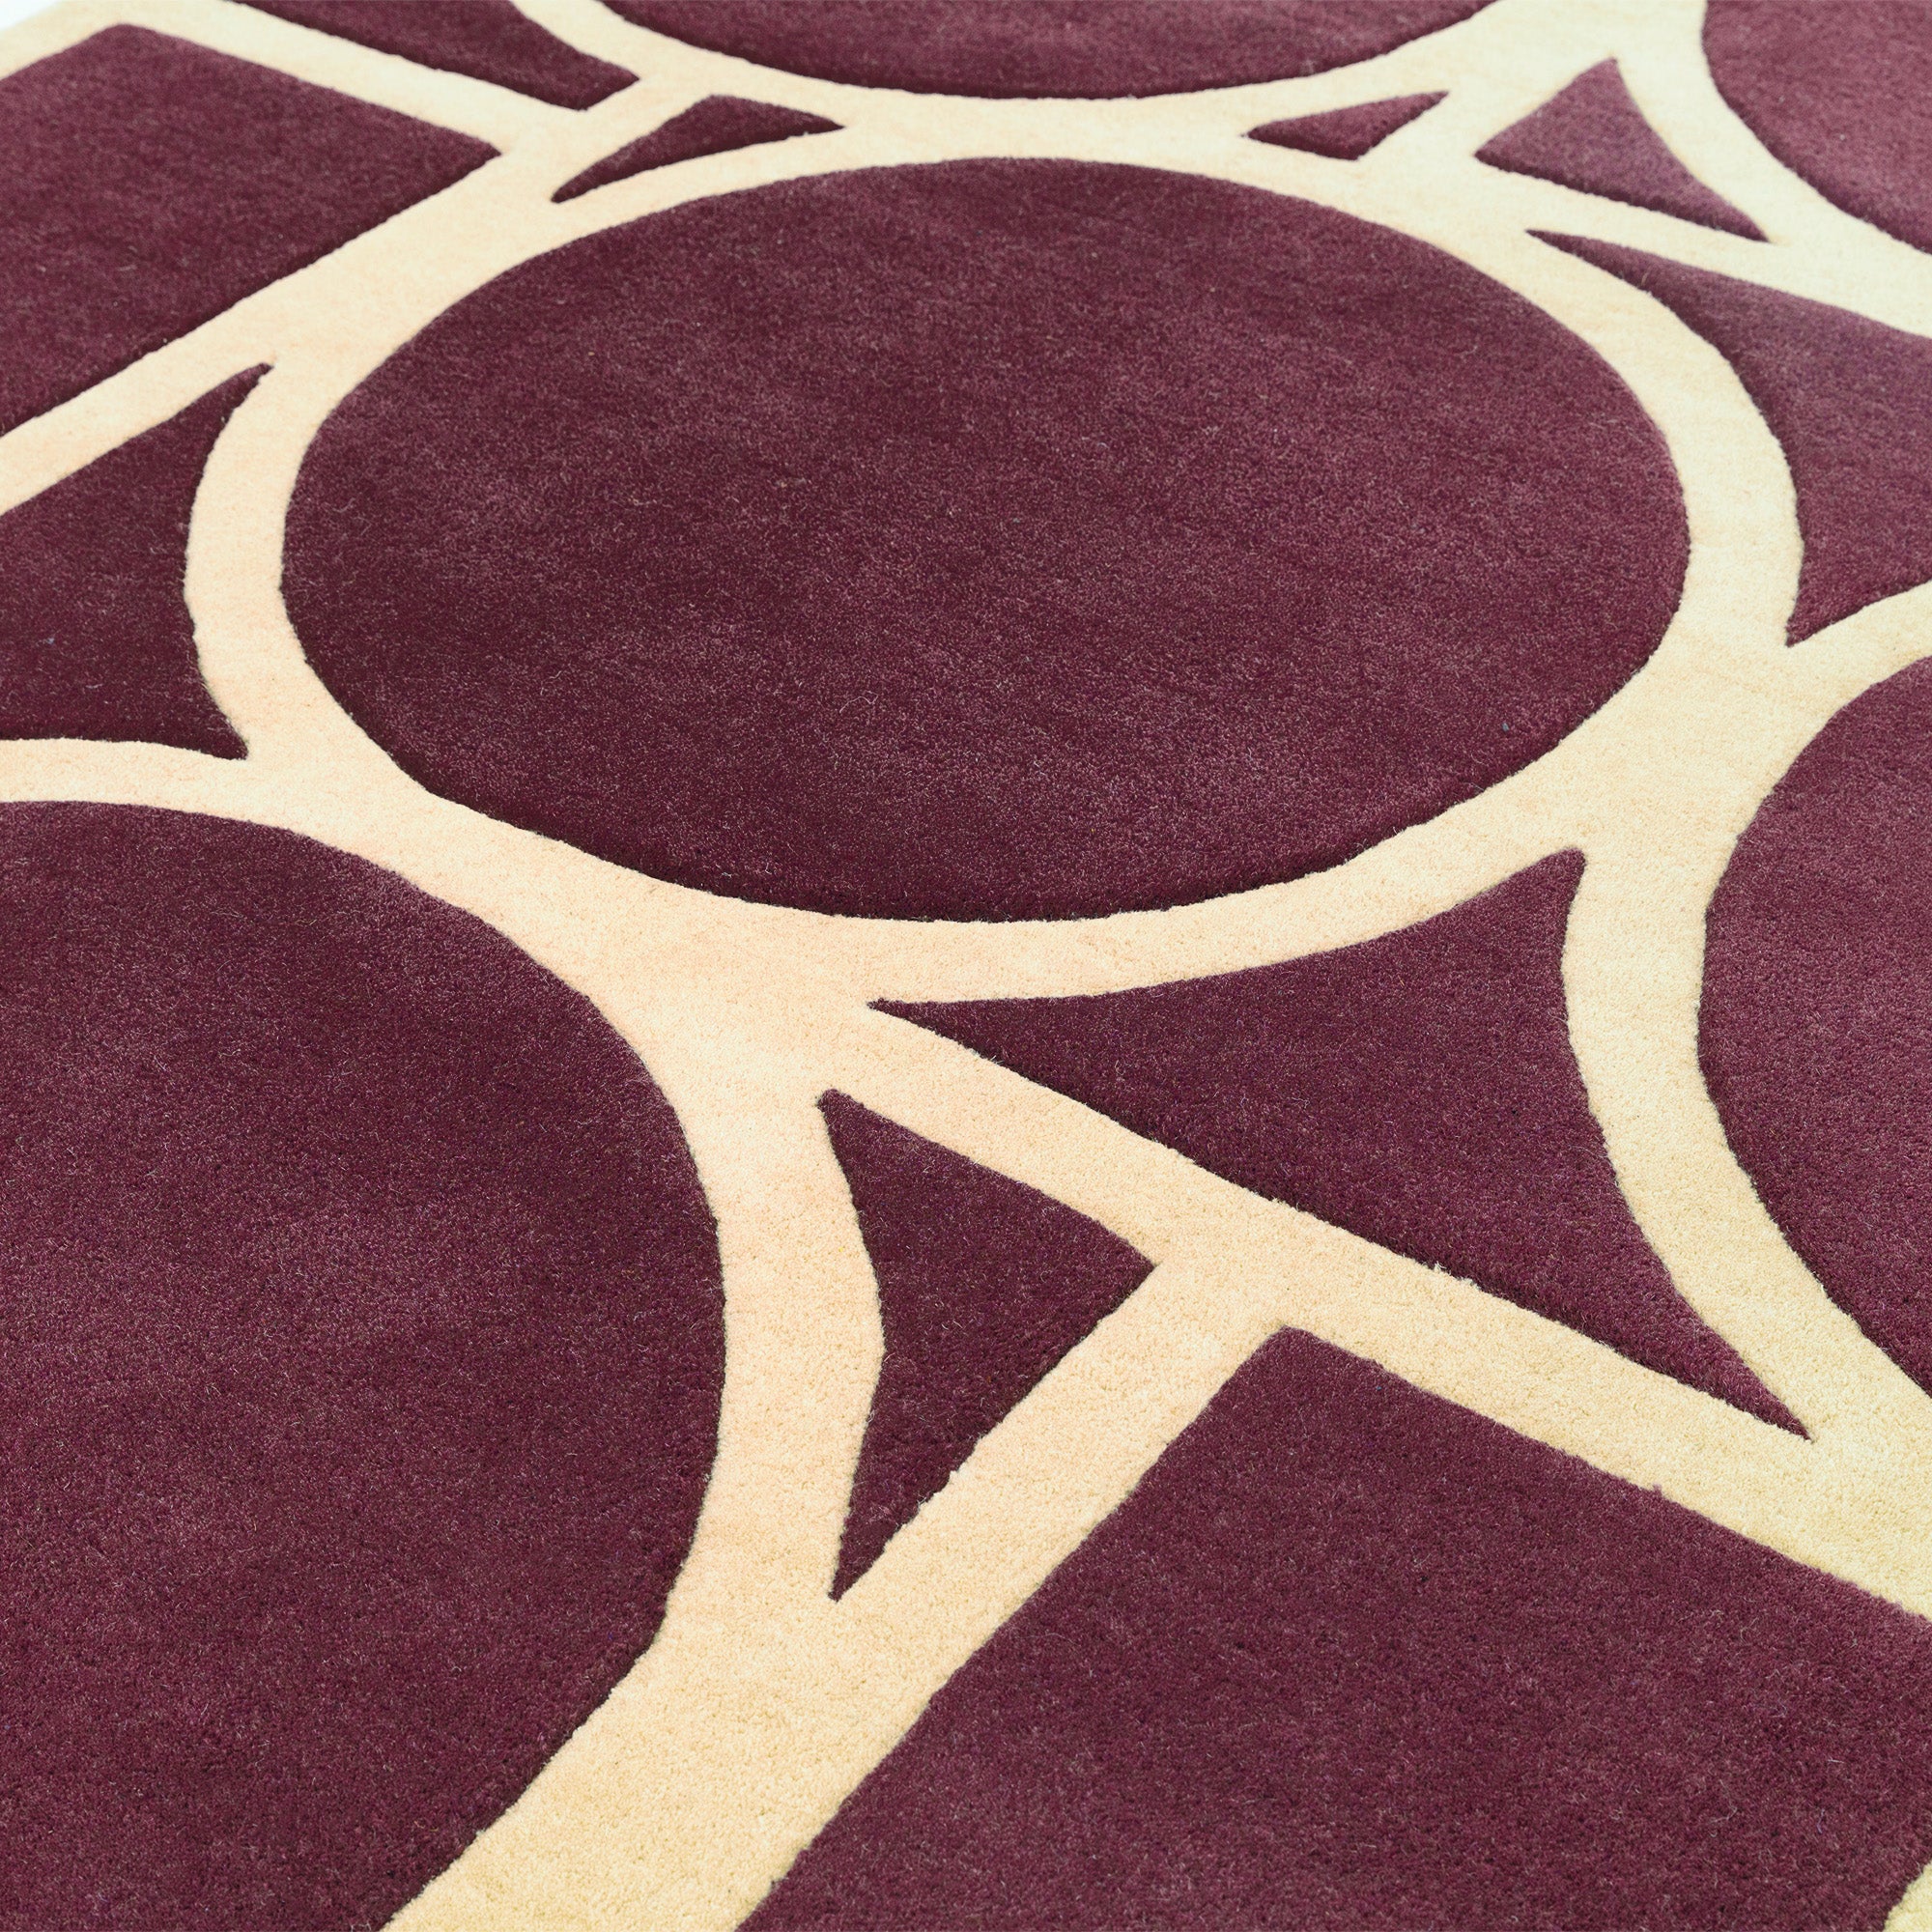 Metro Plum purple rug